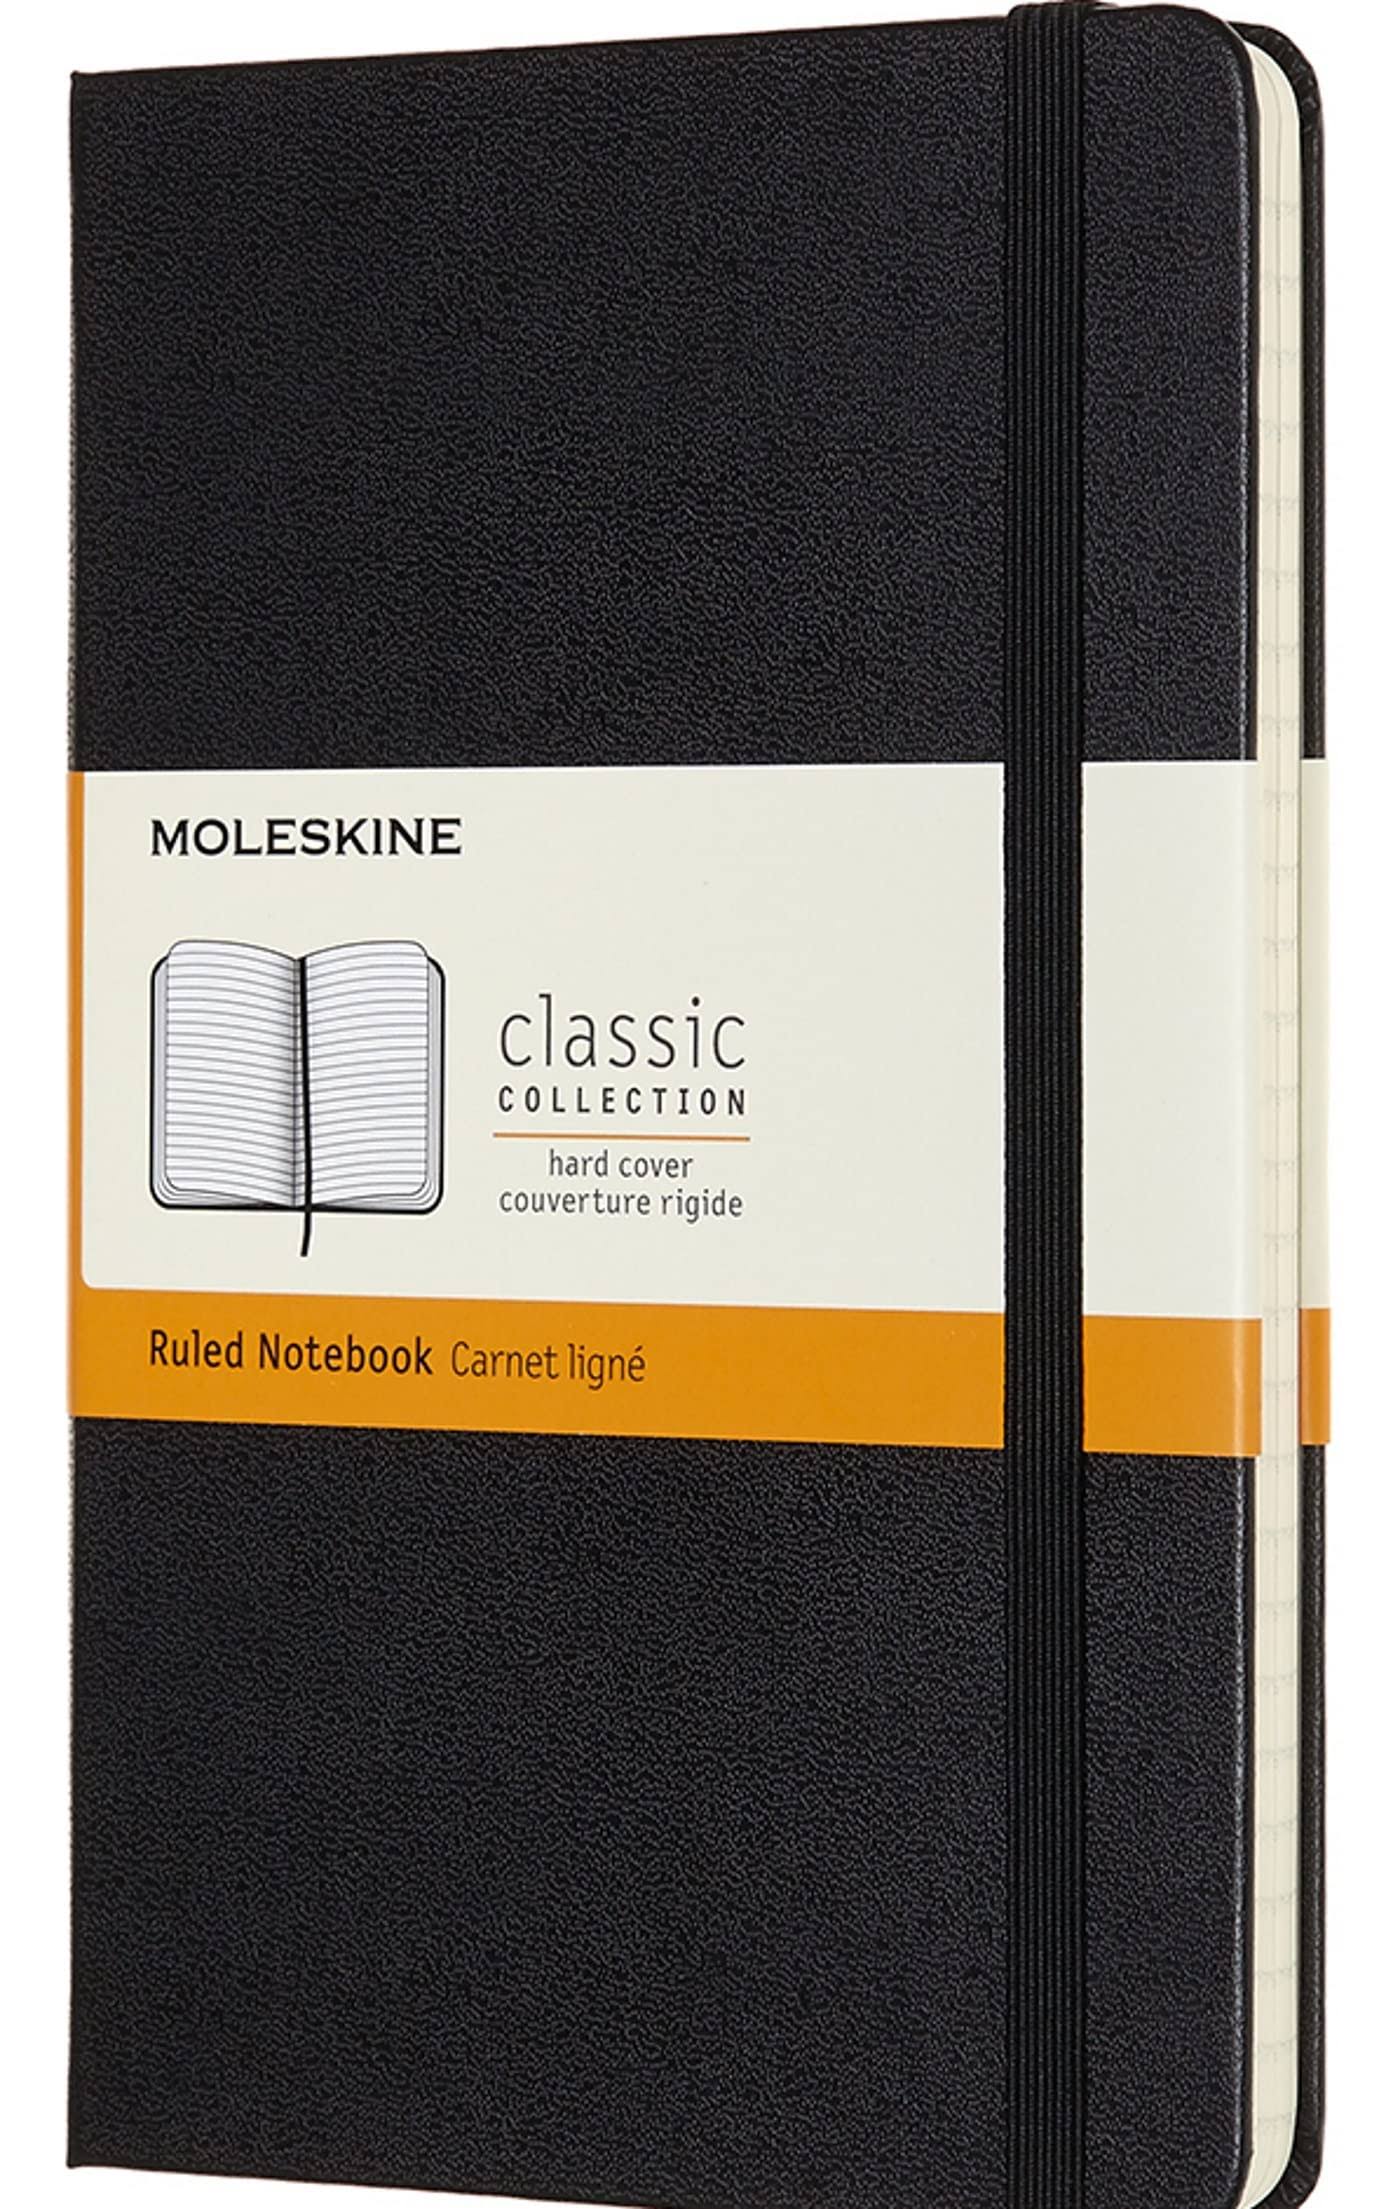 Moleskine Classic Hard Cover Notebook - Black, Medium, Ruled